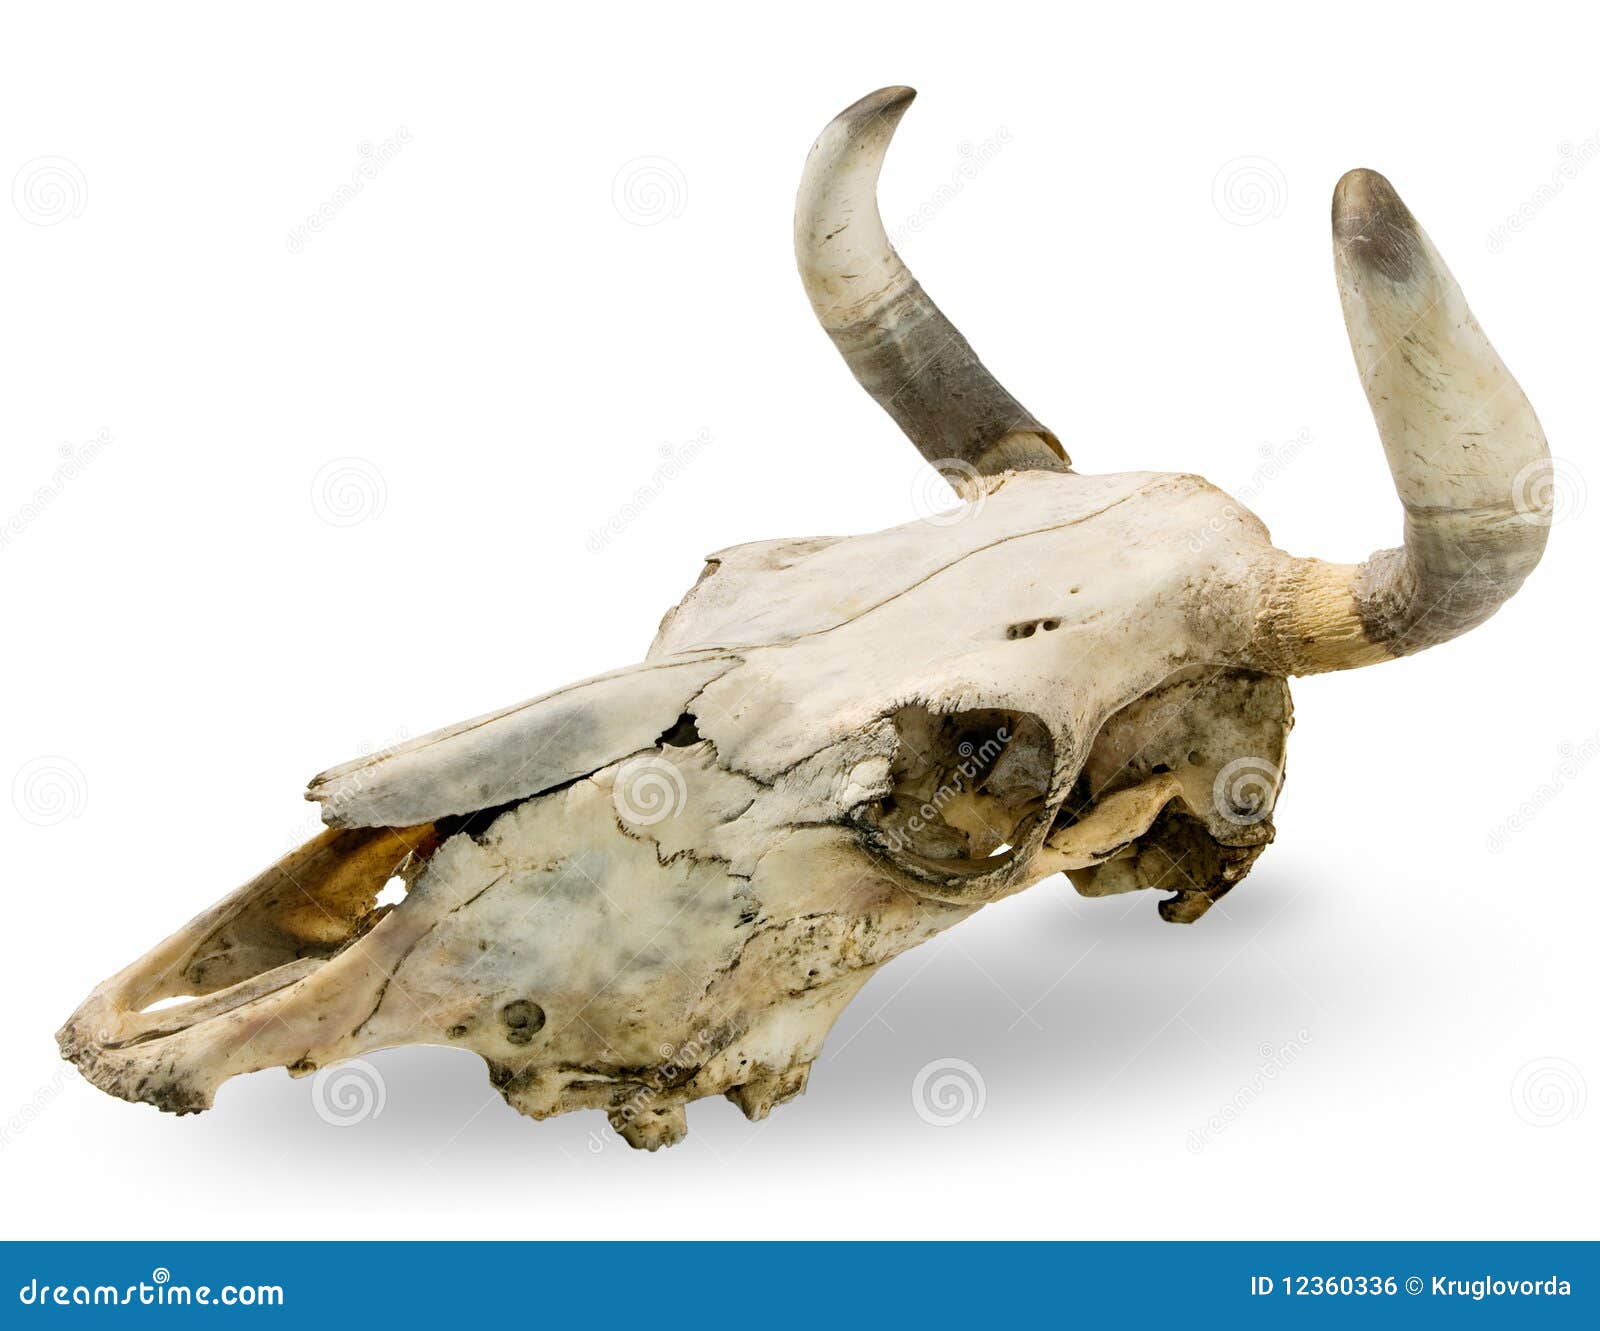 bull-skull-12360336.jpg